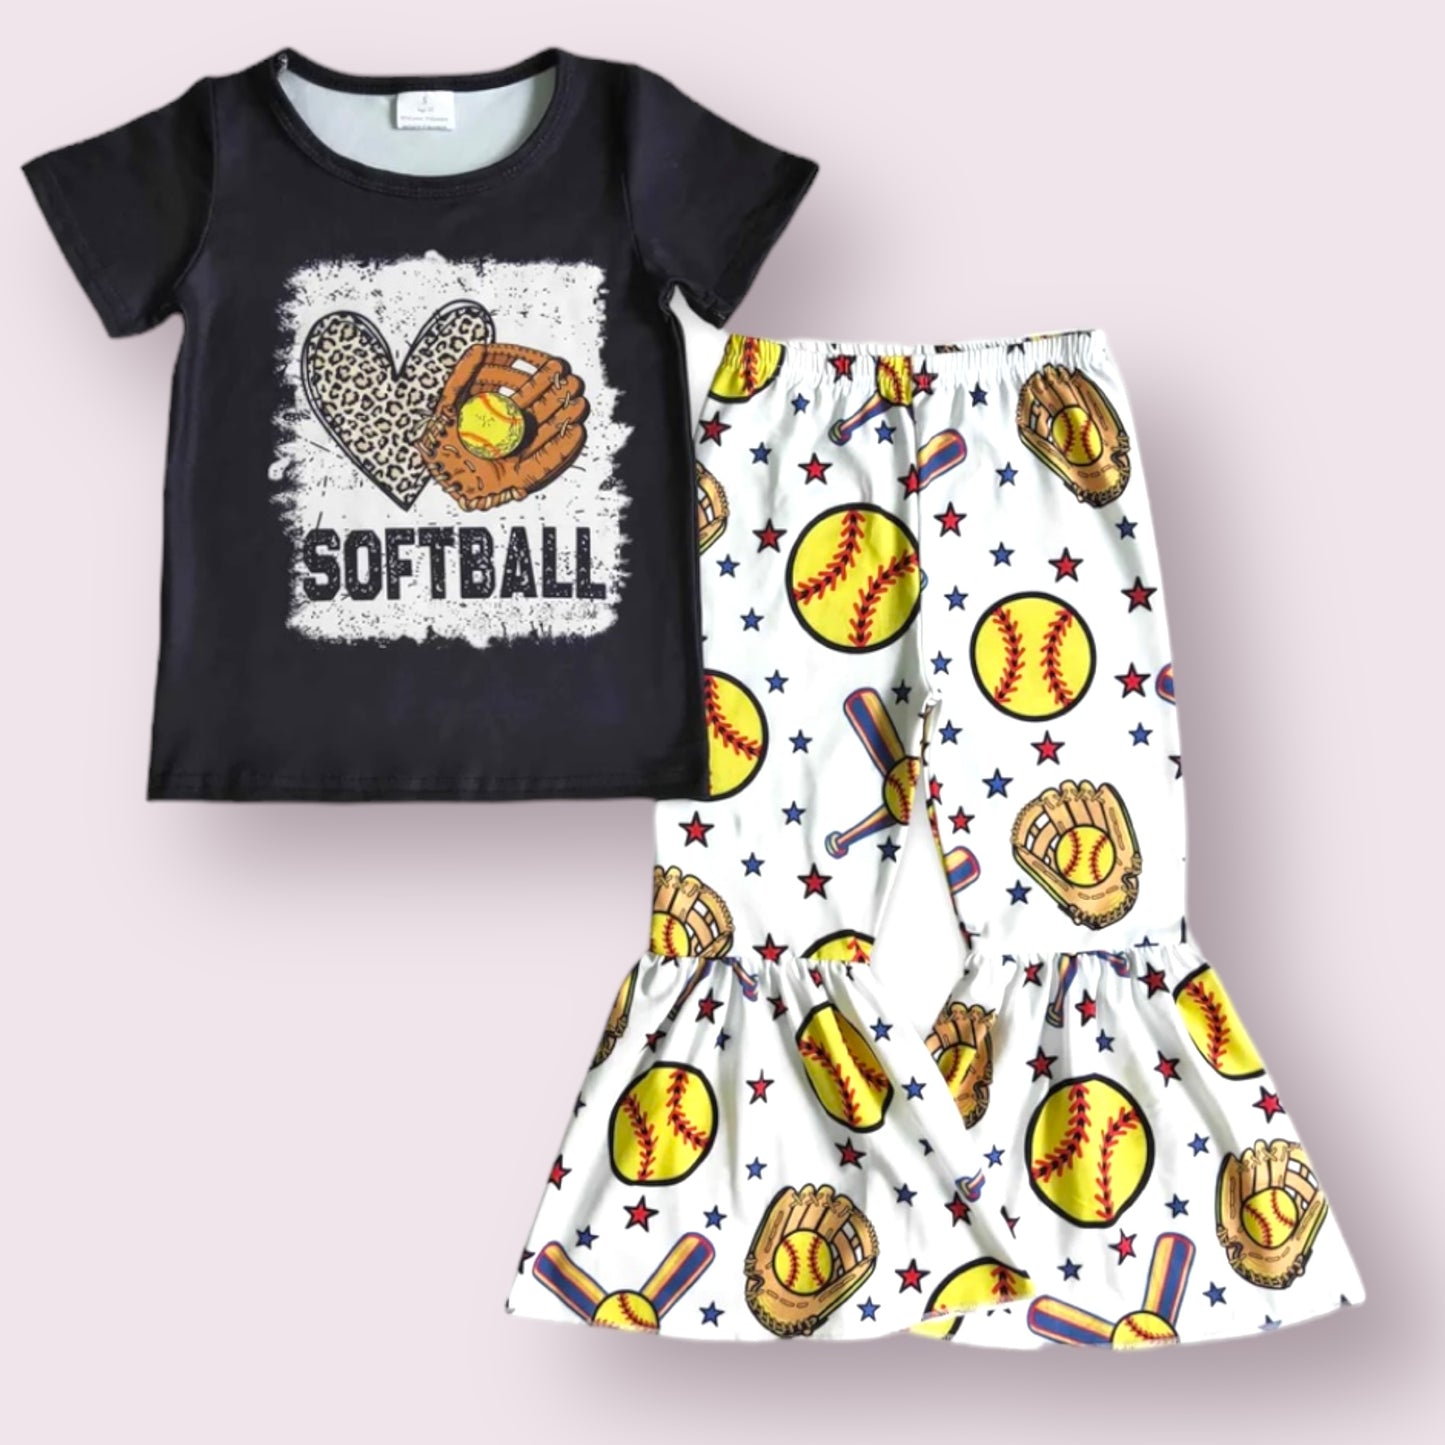 Softball Girl’s Bell Pant set